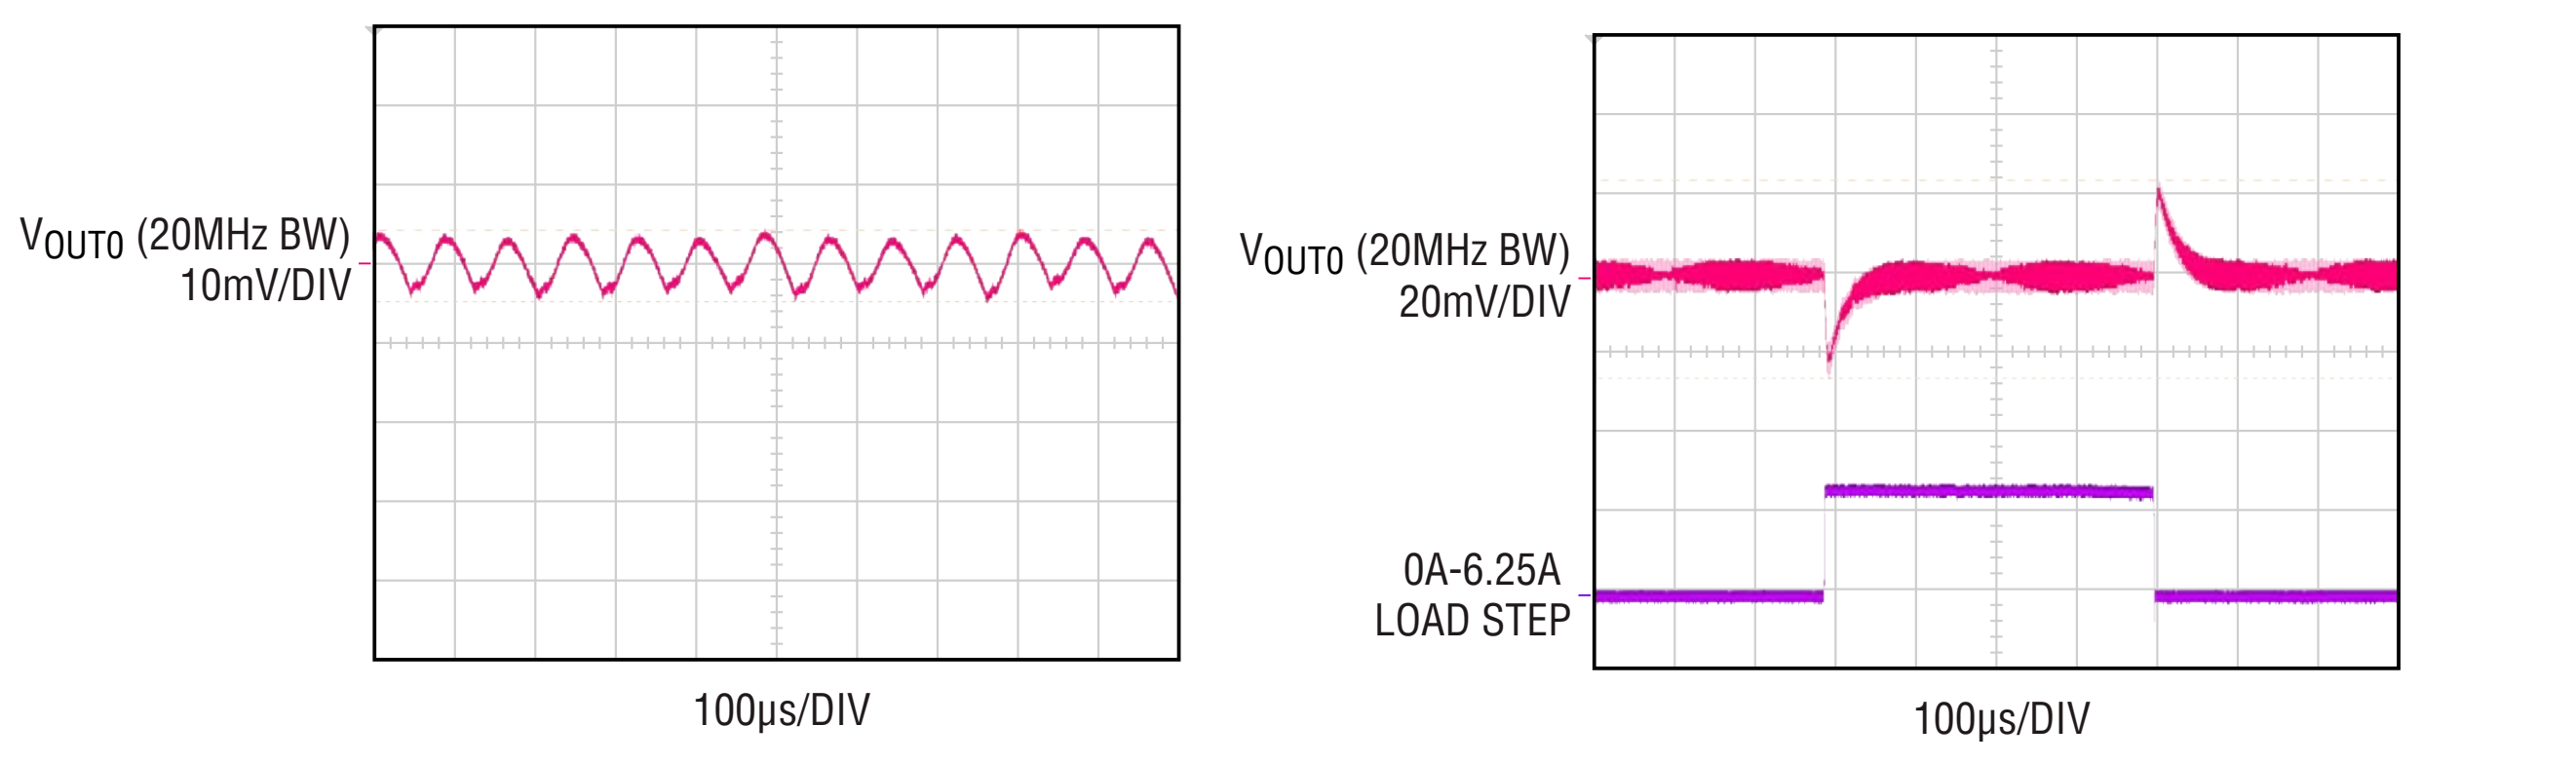 Figure 3: Ripple voltage and load response characteristics